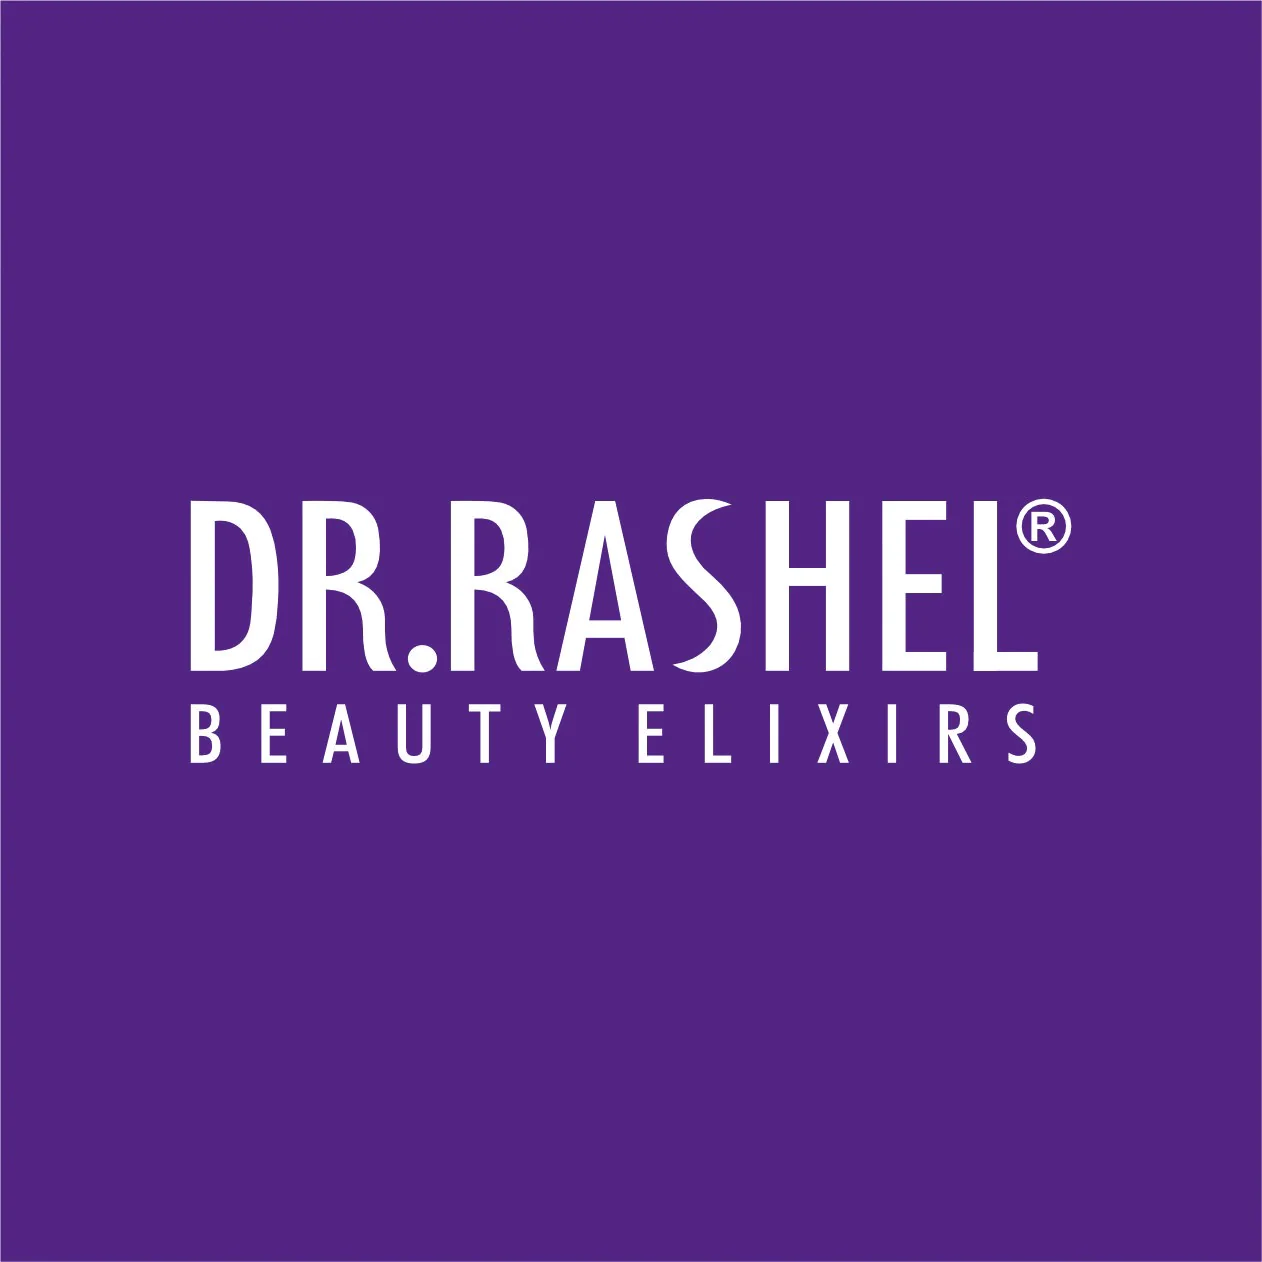 Brand: Dr.Rashel